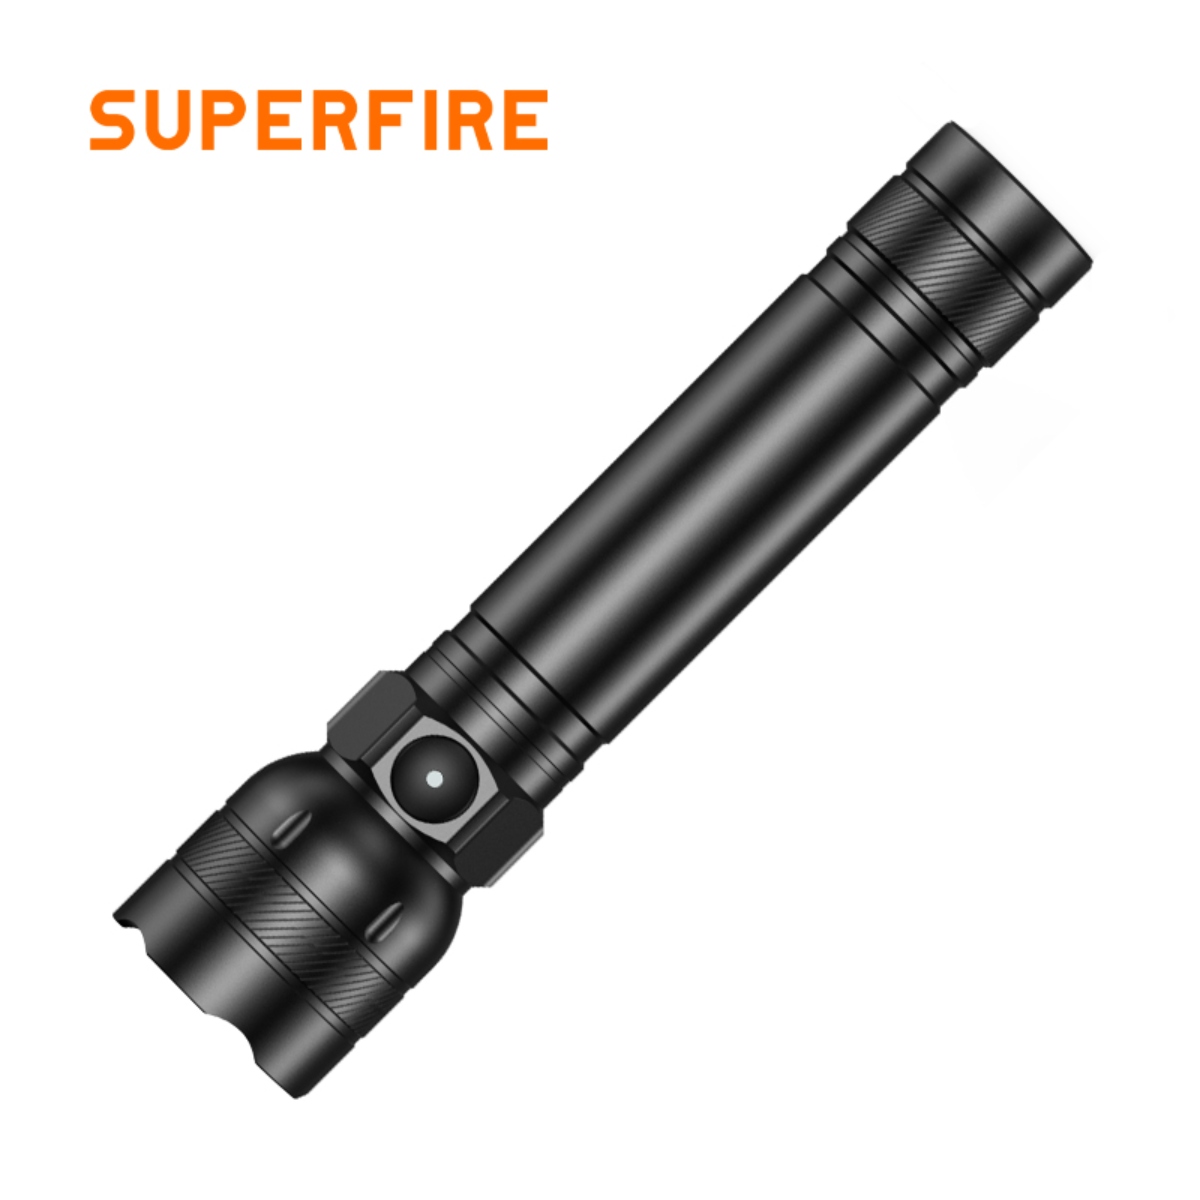 SUPERFIRE L27 Super Bright Dry Battery Flashlight